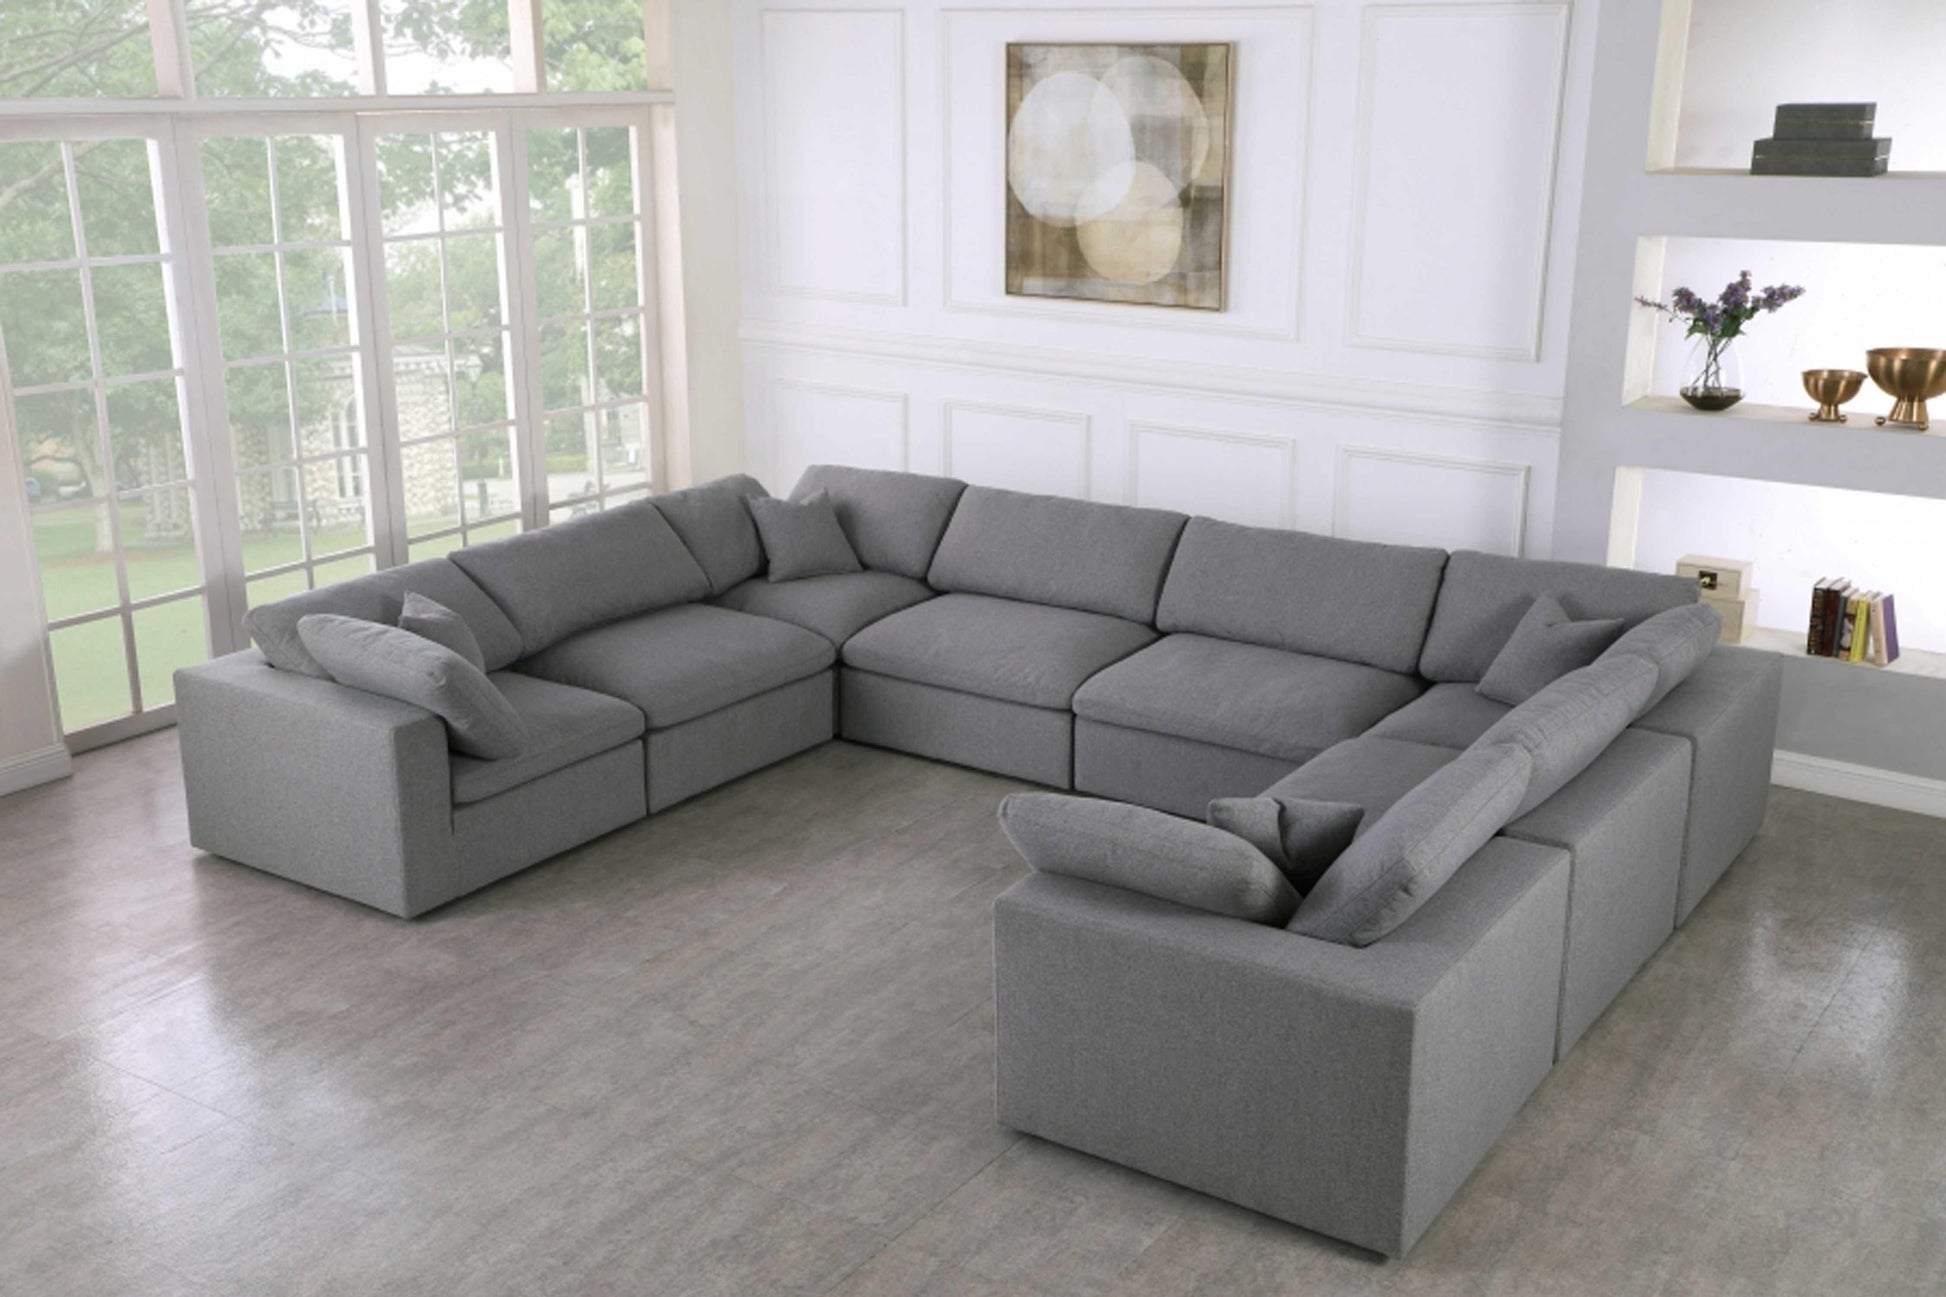 Serene Linen Deluxe Modular Down Filled Cloud-Like Comfort Overstuffed Sectional SKU: 601-Sec8A - Venini Furniture 